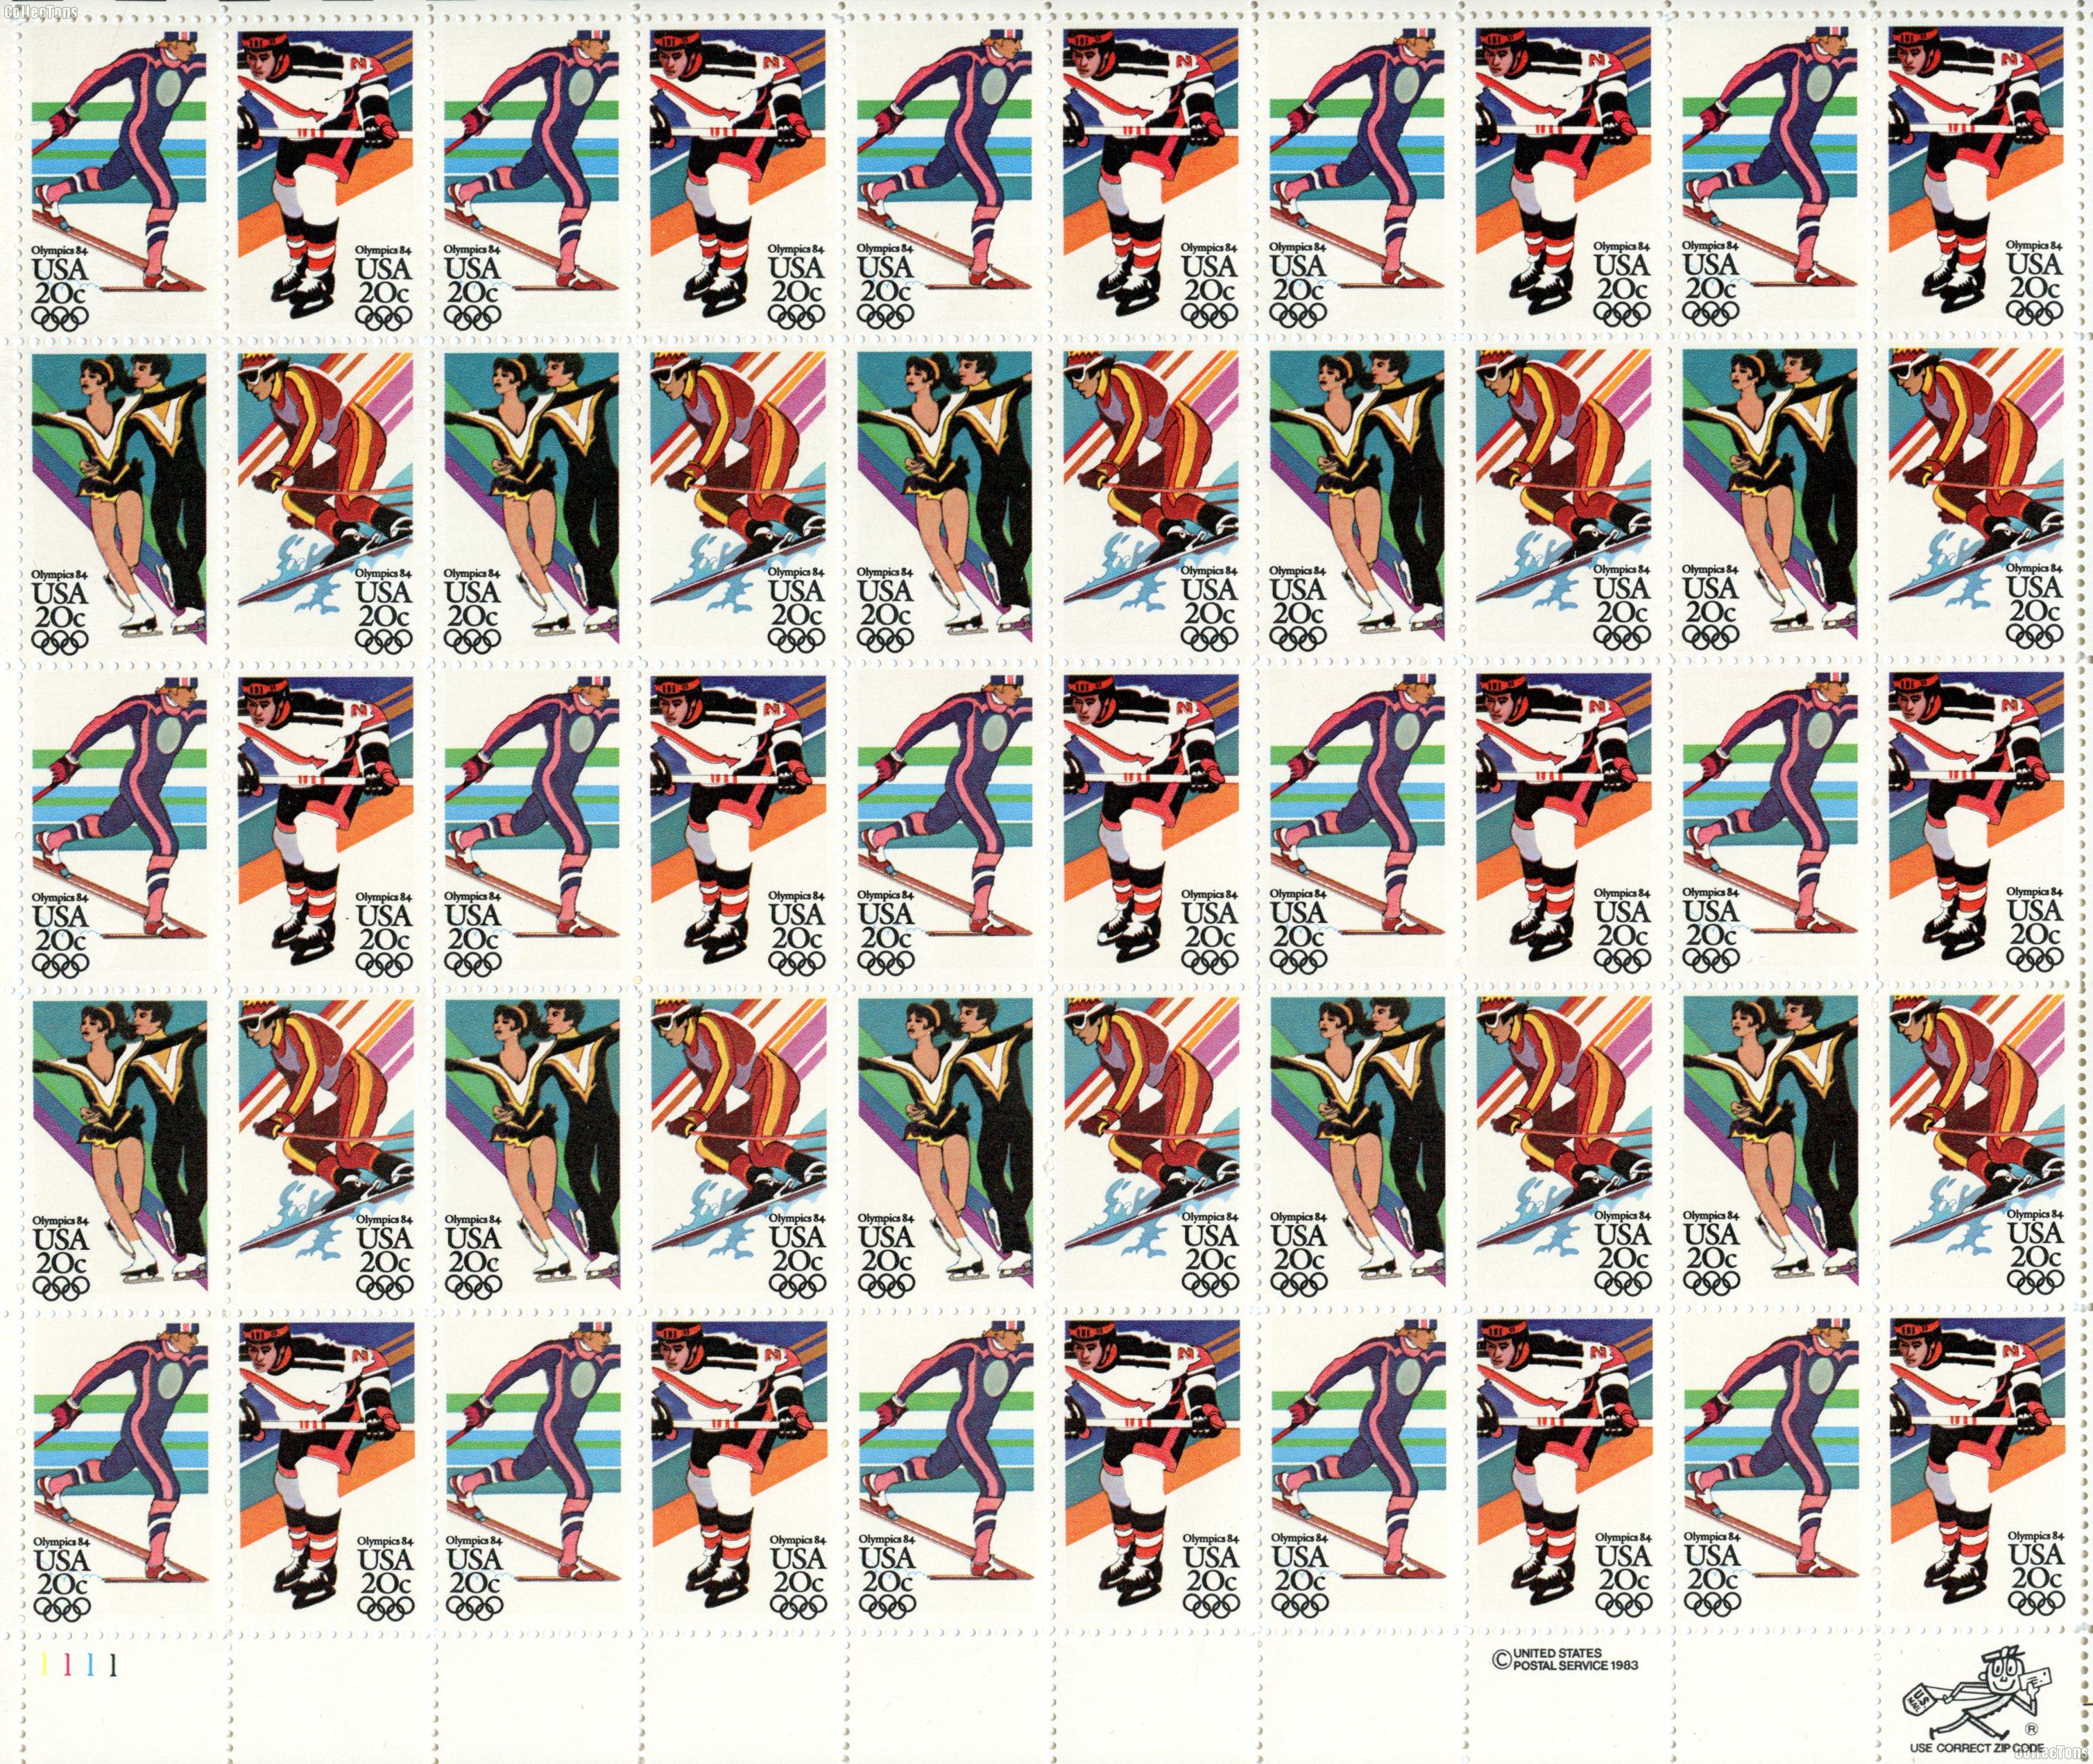 1984 Winter Olympics 20 Cent US Postage Stamp MNH Sheet of 50 Scott #2067-2070